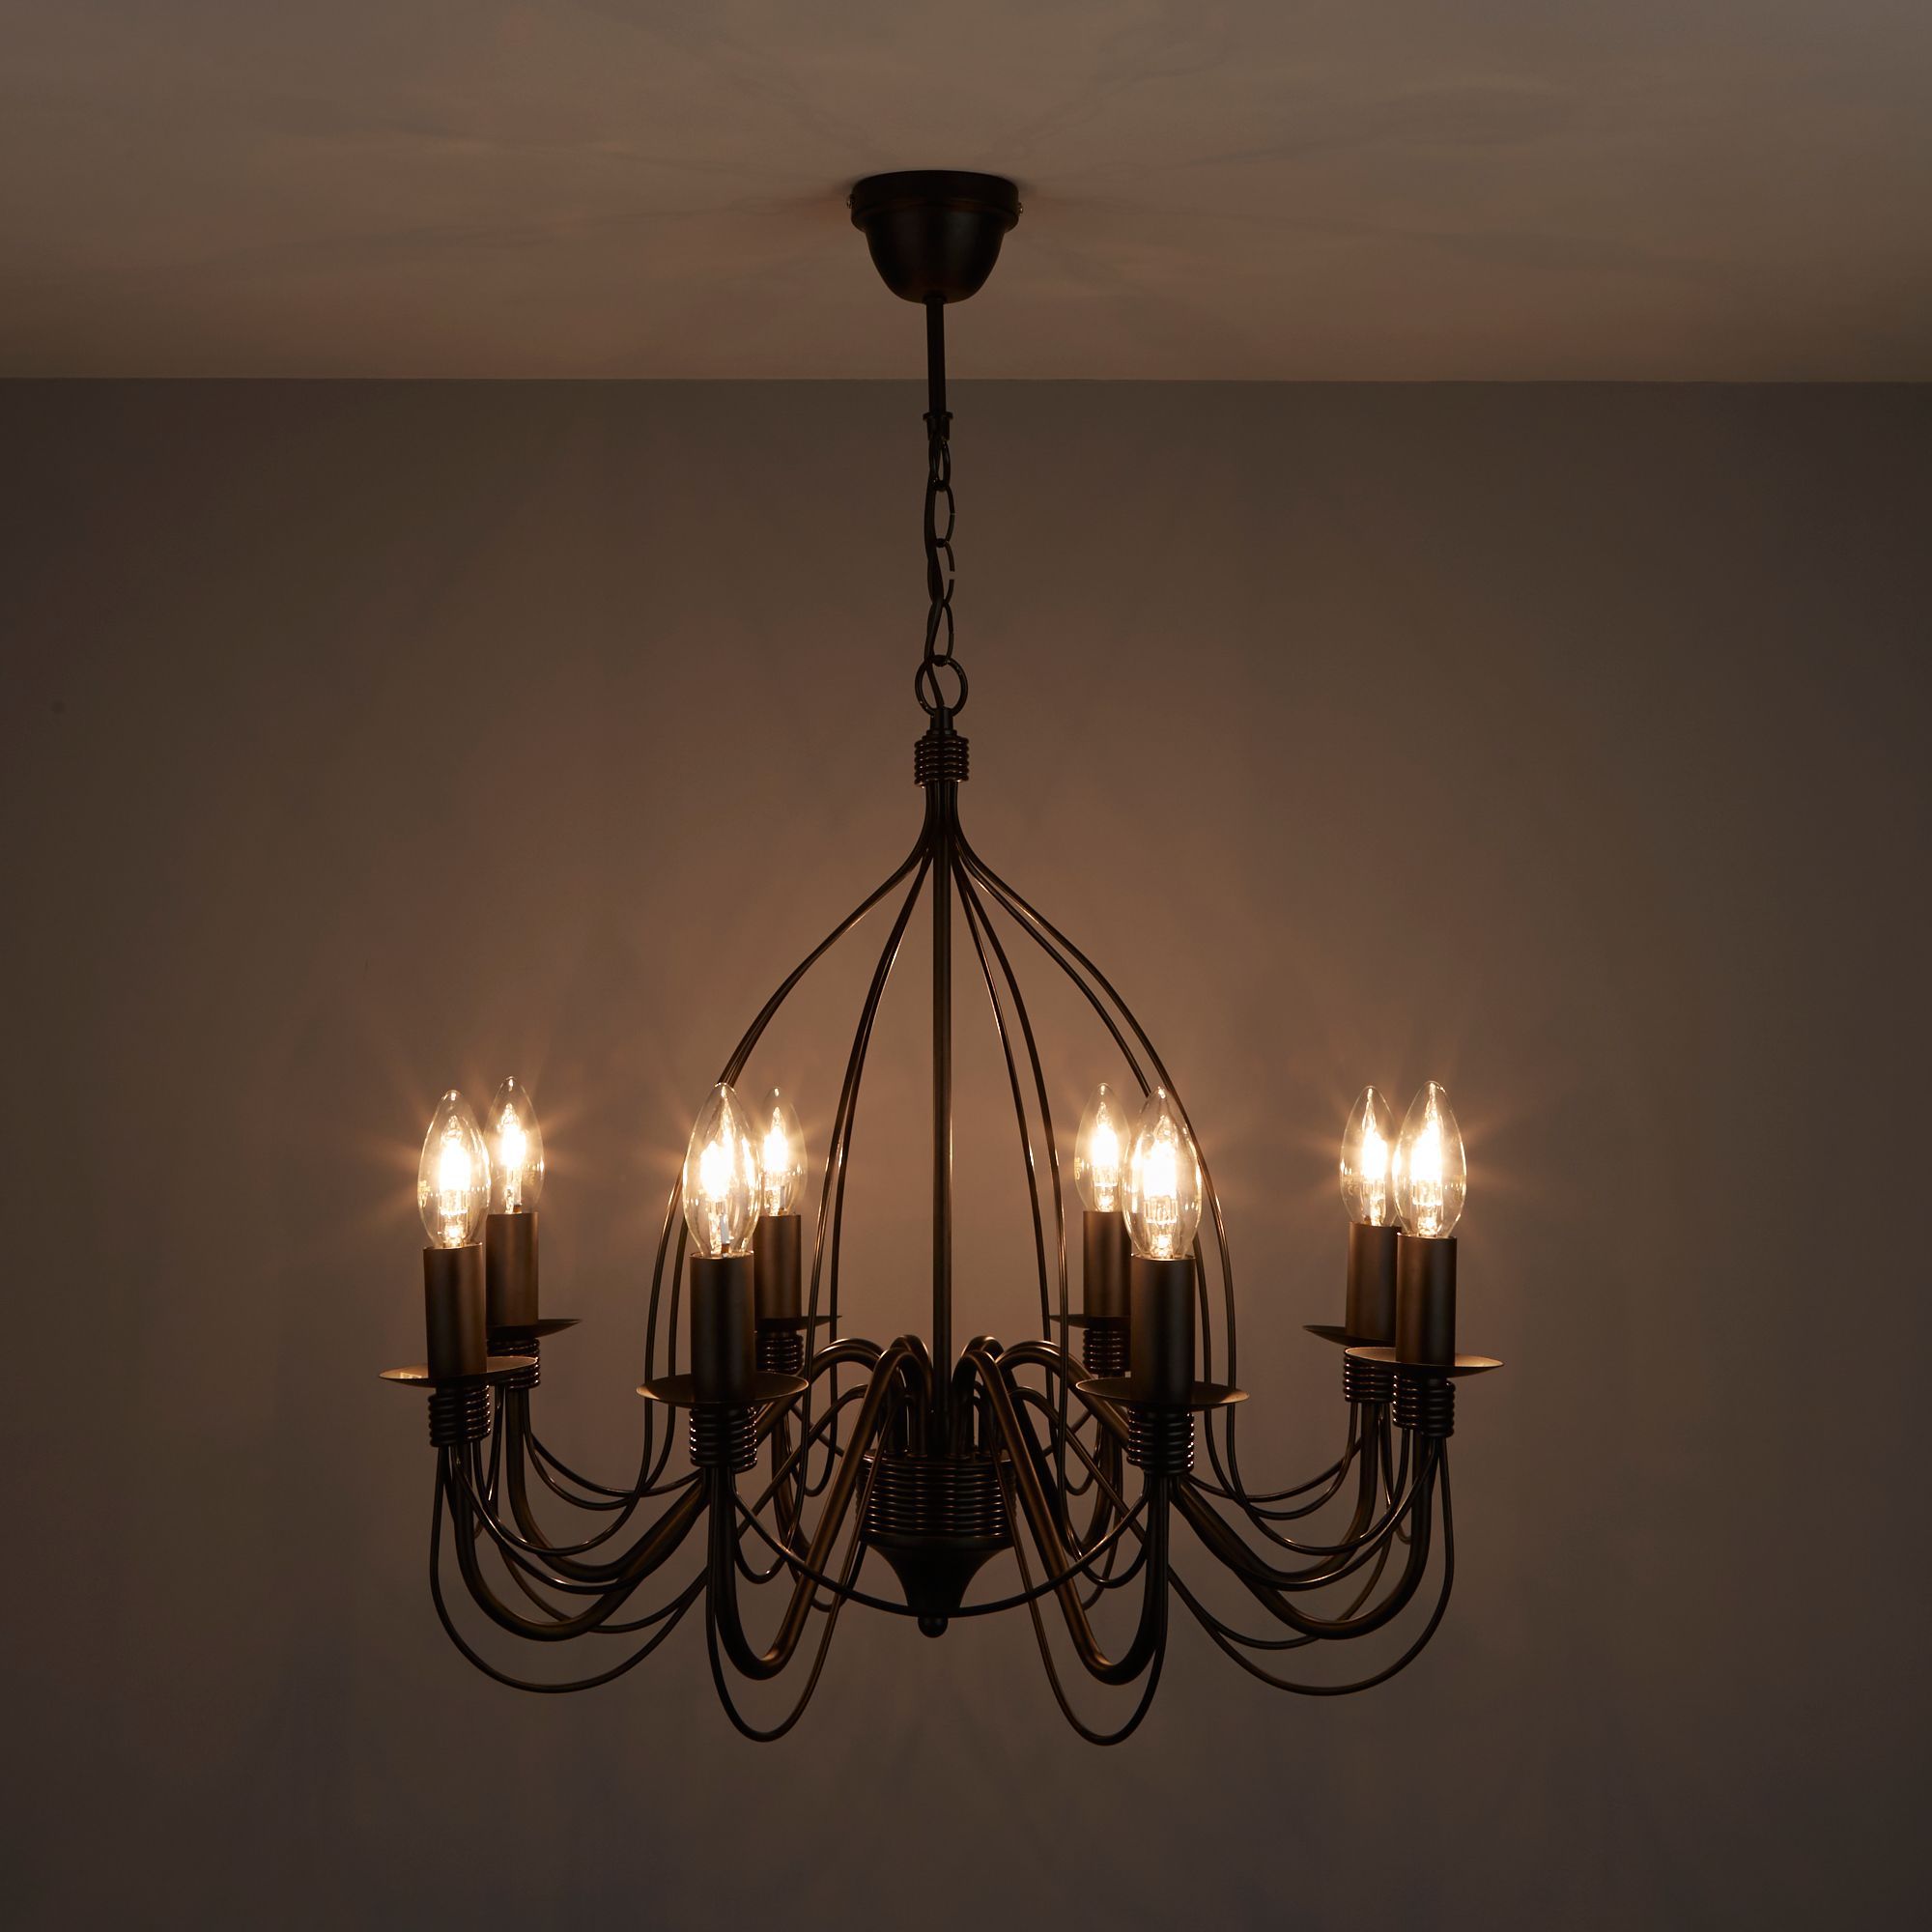 Vas Matt Black 8 Lamp Chandelier Ceiling Light Departments